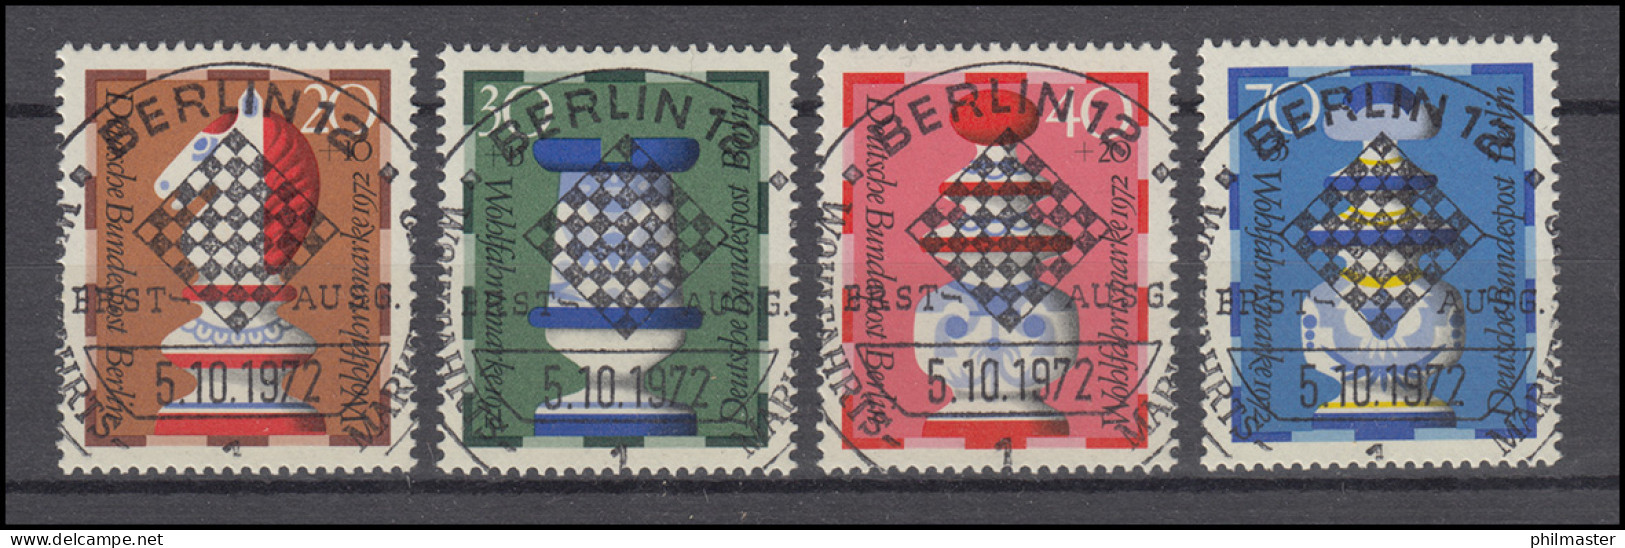 435-438 Wofa Schachfiguren 1972 - Satz Mit Vollstempel ESSt BERLIN 5.10.72 - Usados